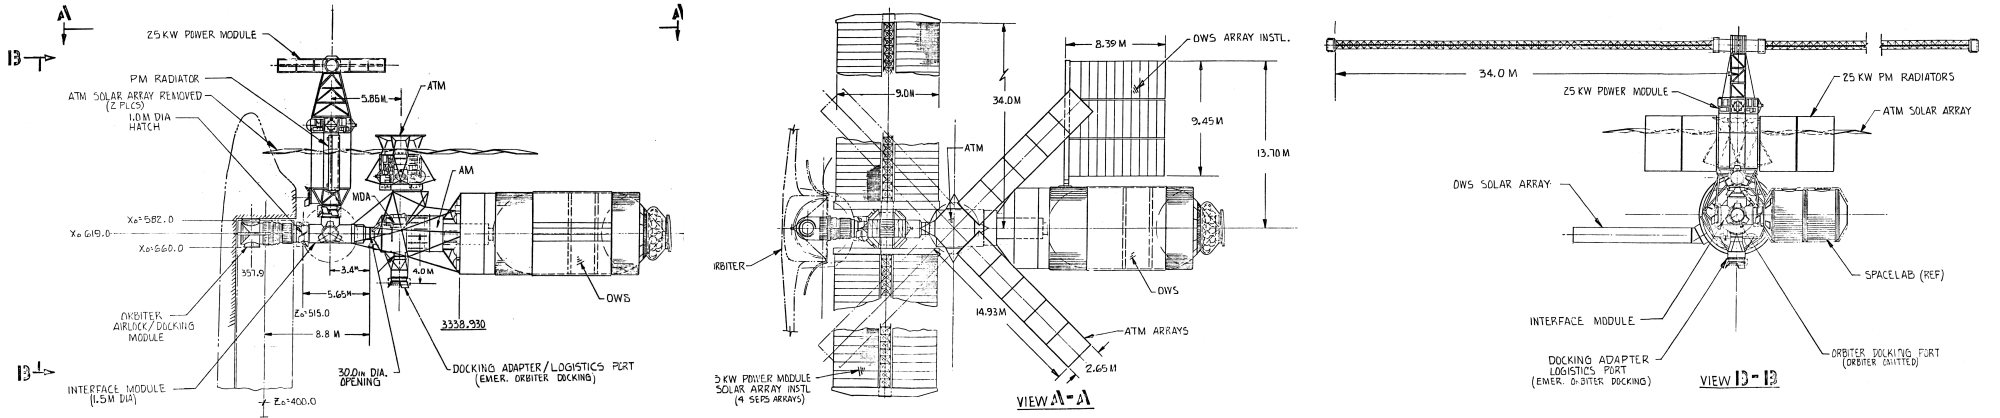 http://www.aerospaceprojectsreview.com/blog/wp-content/uploads/2015/03/Shuttle-skylab-diagram-small.jpg